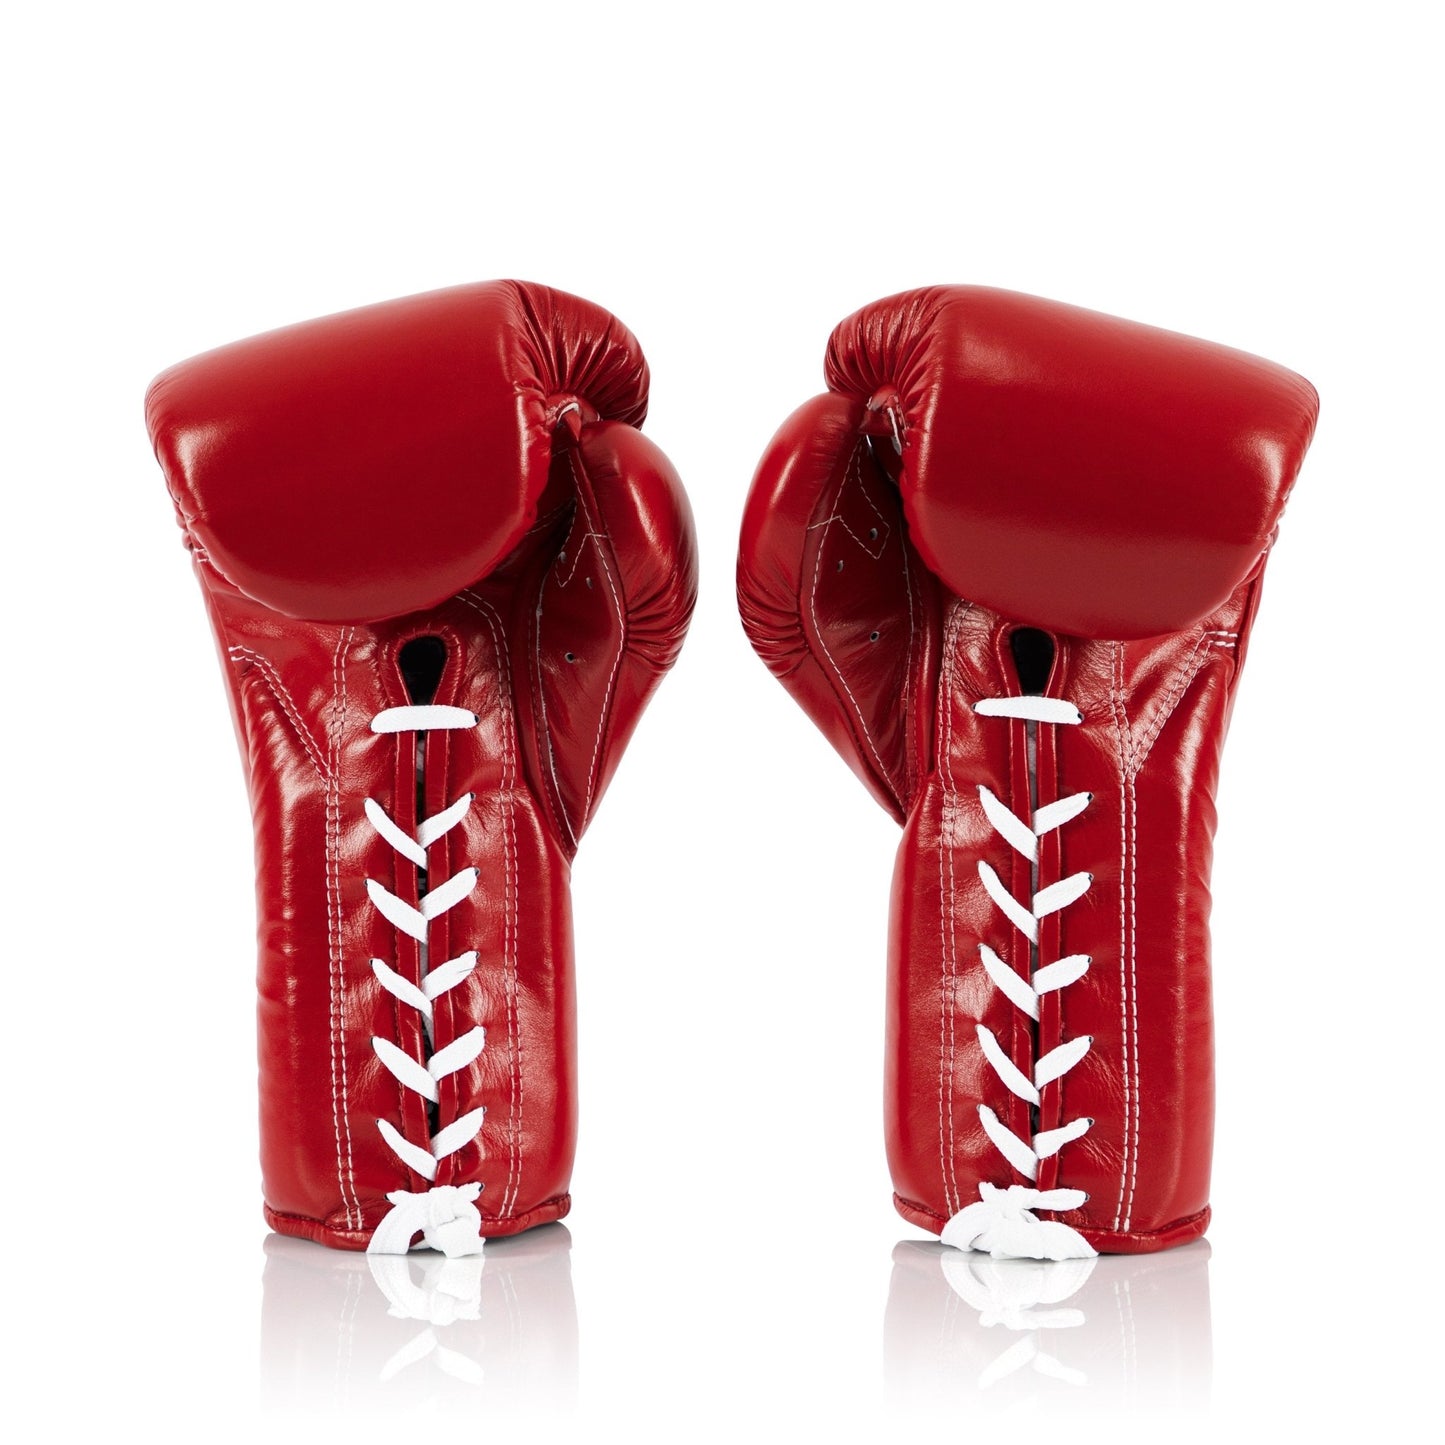 Fairtex Boxing Gloves PRO TRAINNING BGL 7 Red - SUPER EXPORT SHOP